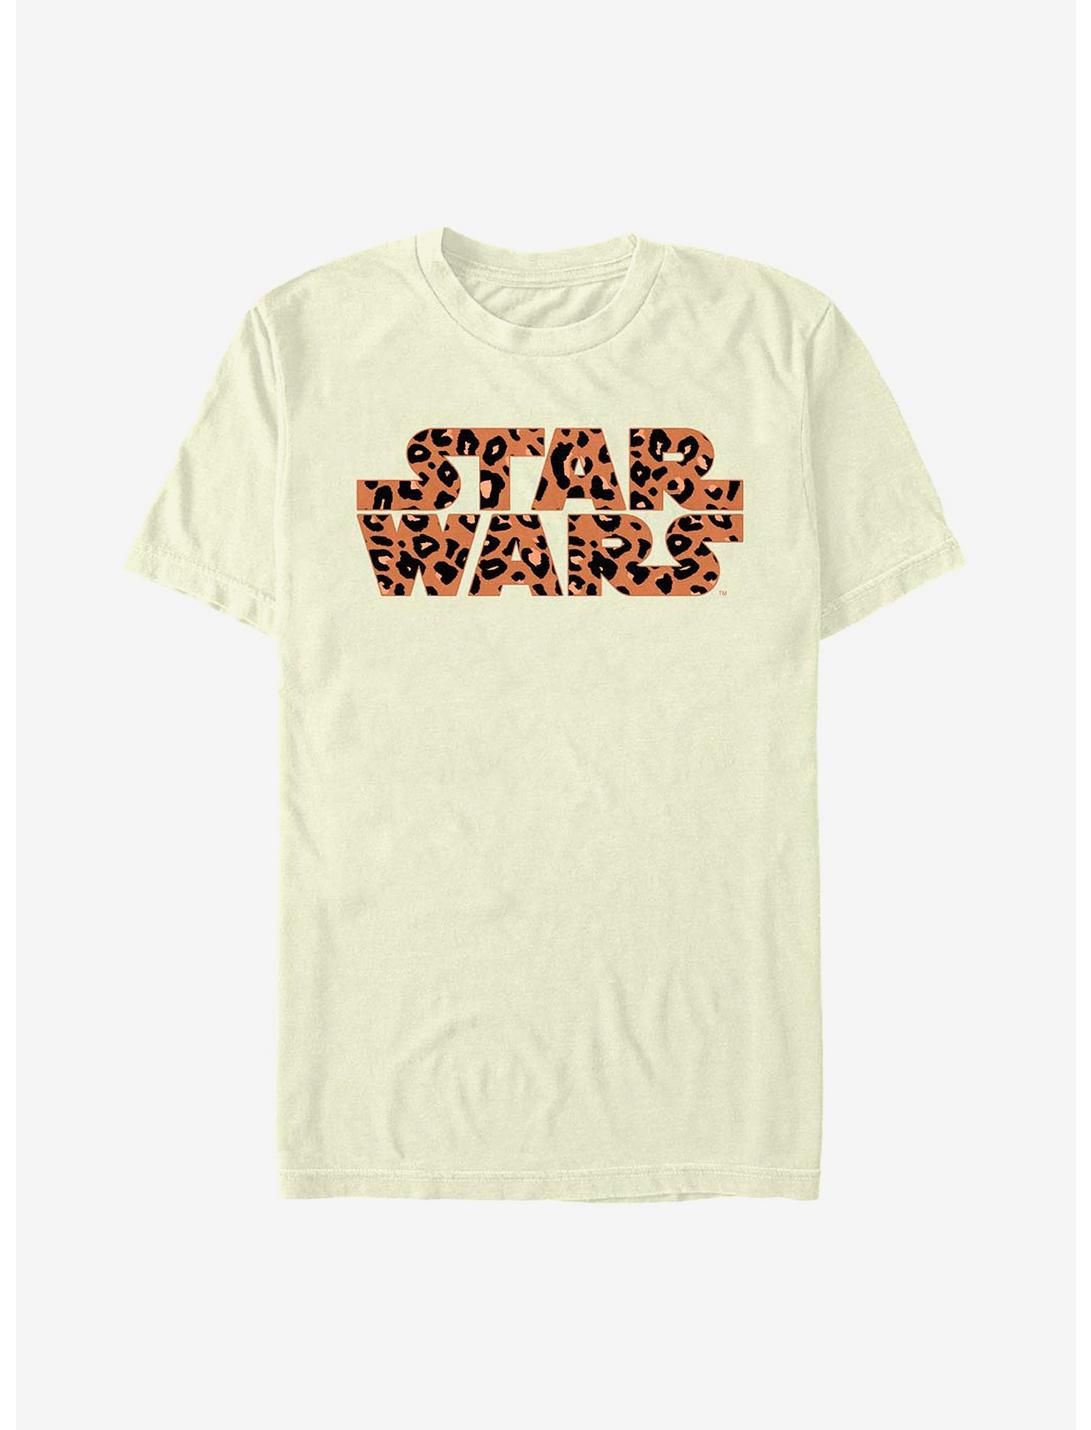 Star Wars Star Wars Logo Cheetah Fill T-Shirt, , hi-res